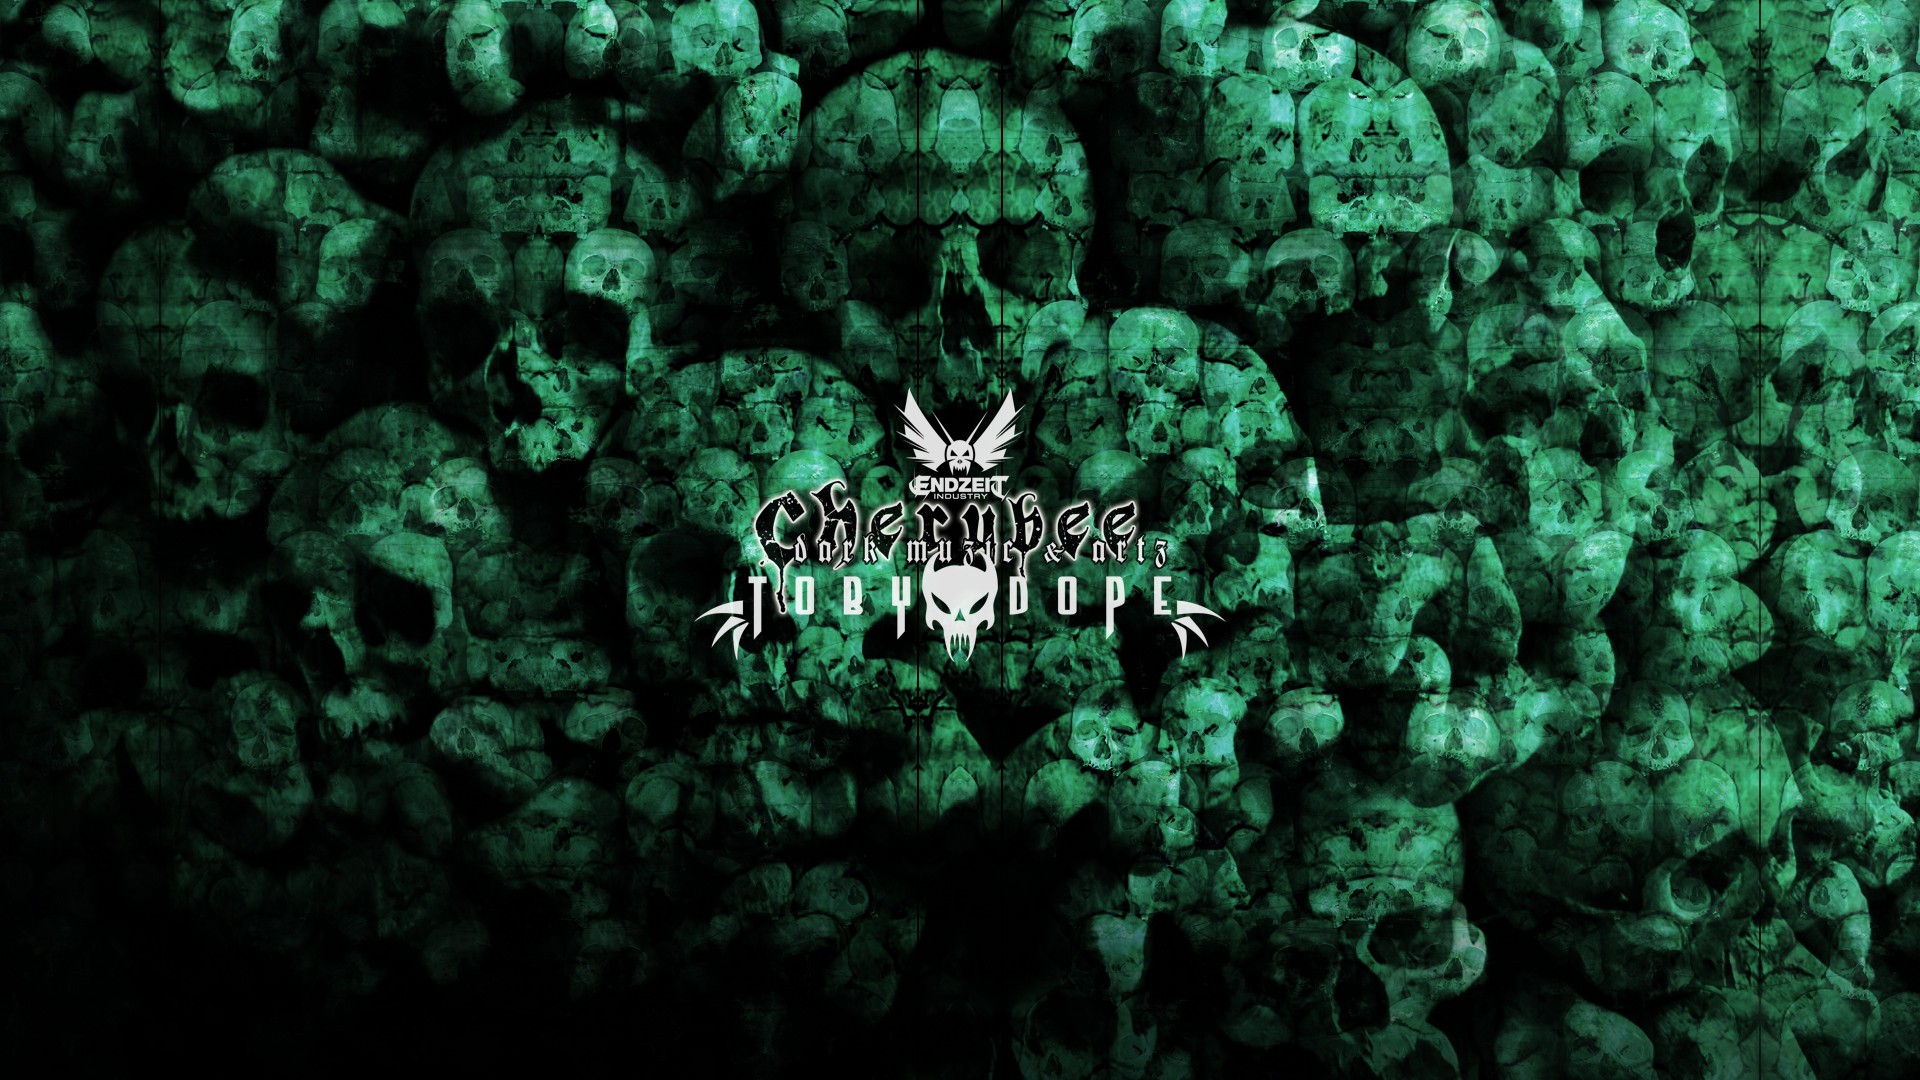 Toby Dope - Wall of Death 2015 - green (2015/Wallpaper/digital)